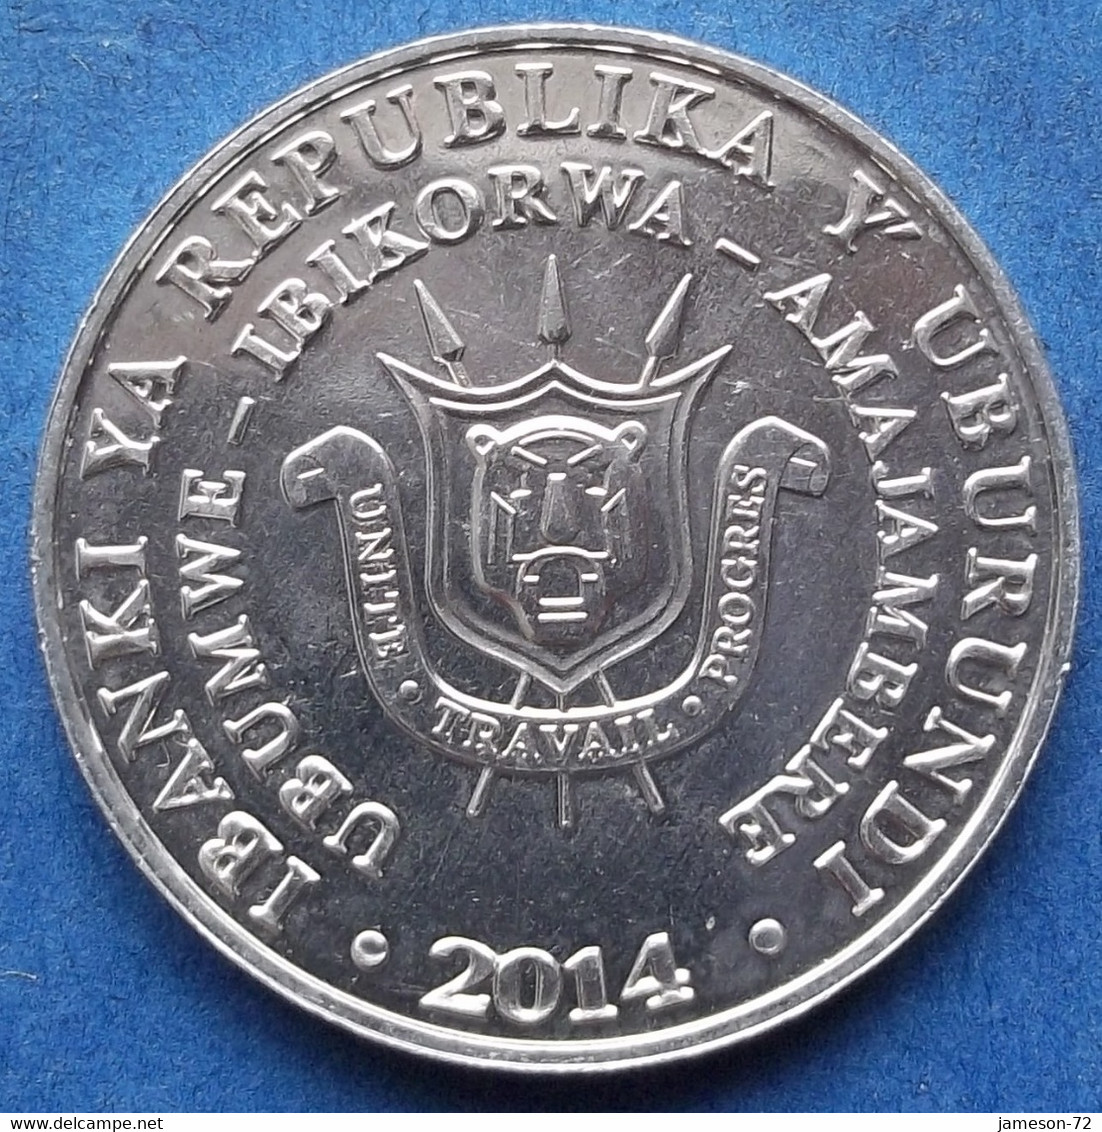 BURUNDI - 5 Francs 2014 "Bycanistes Bucinator" KM# 28 Republic (1966) - Edelweiss Coins - Burundi